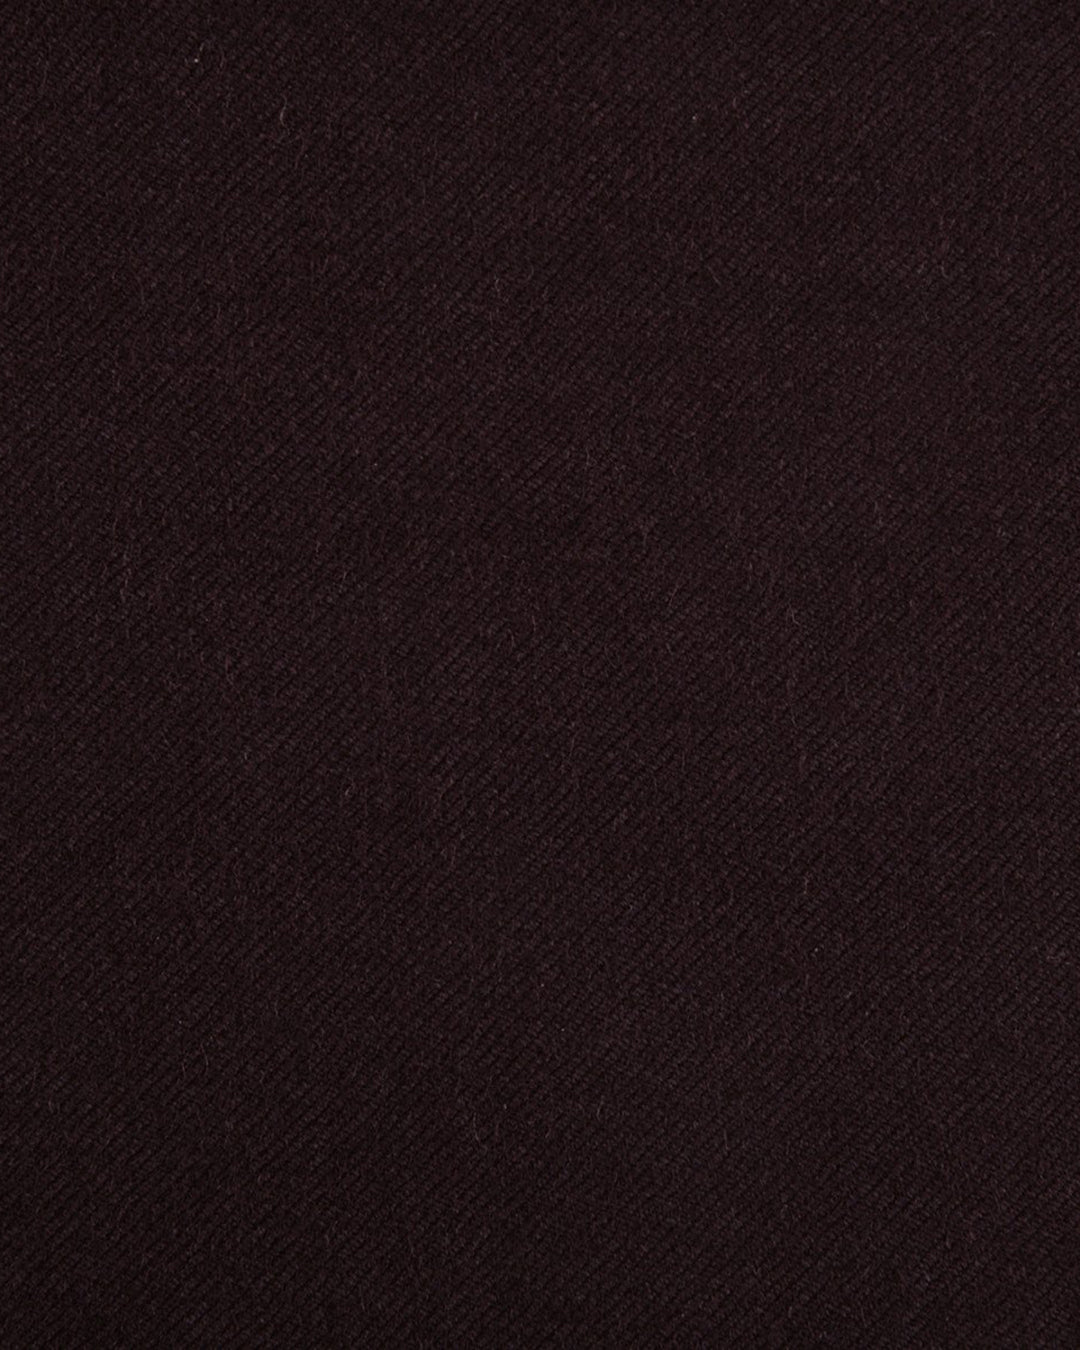 EThomas Wool Cashmere: Chocolate Brown Jacket